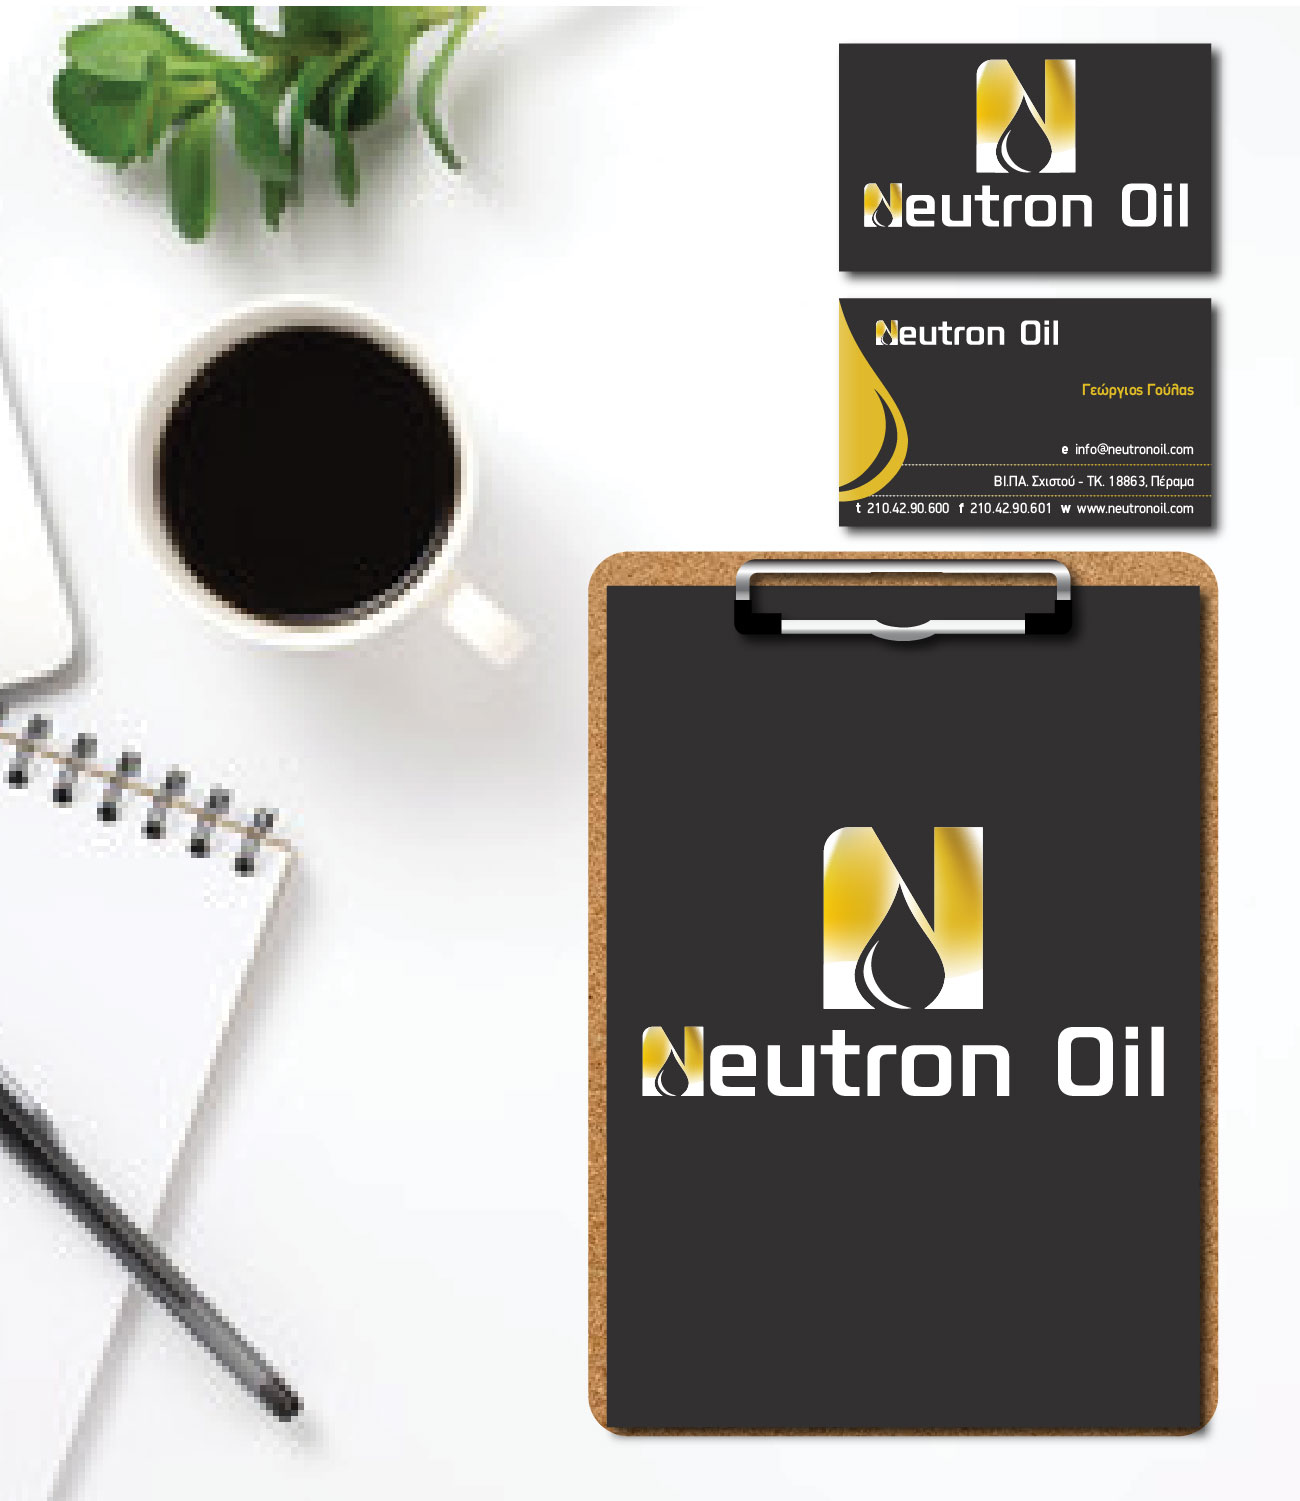 neutronoil - brand identity design